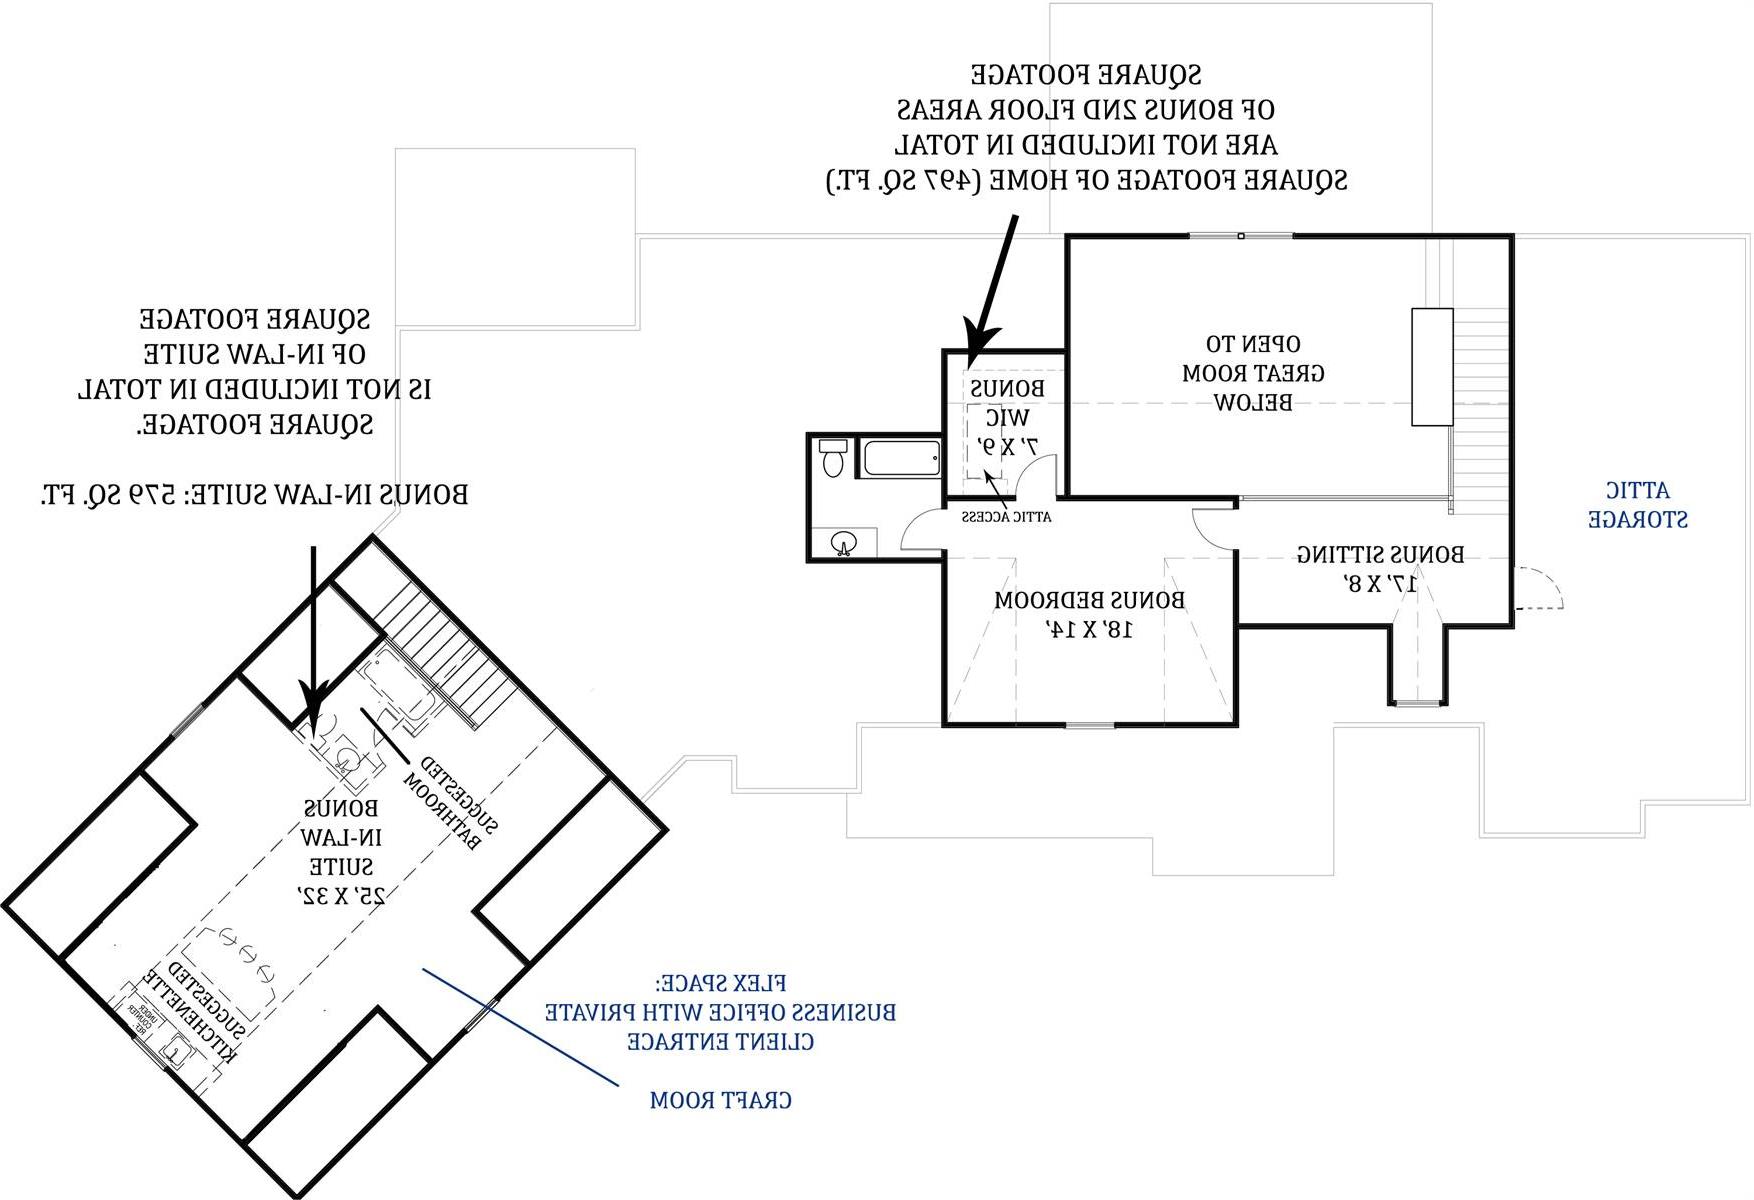 2nd Floor image of Tres Le Fleur House Plan